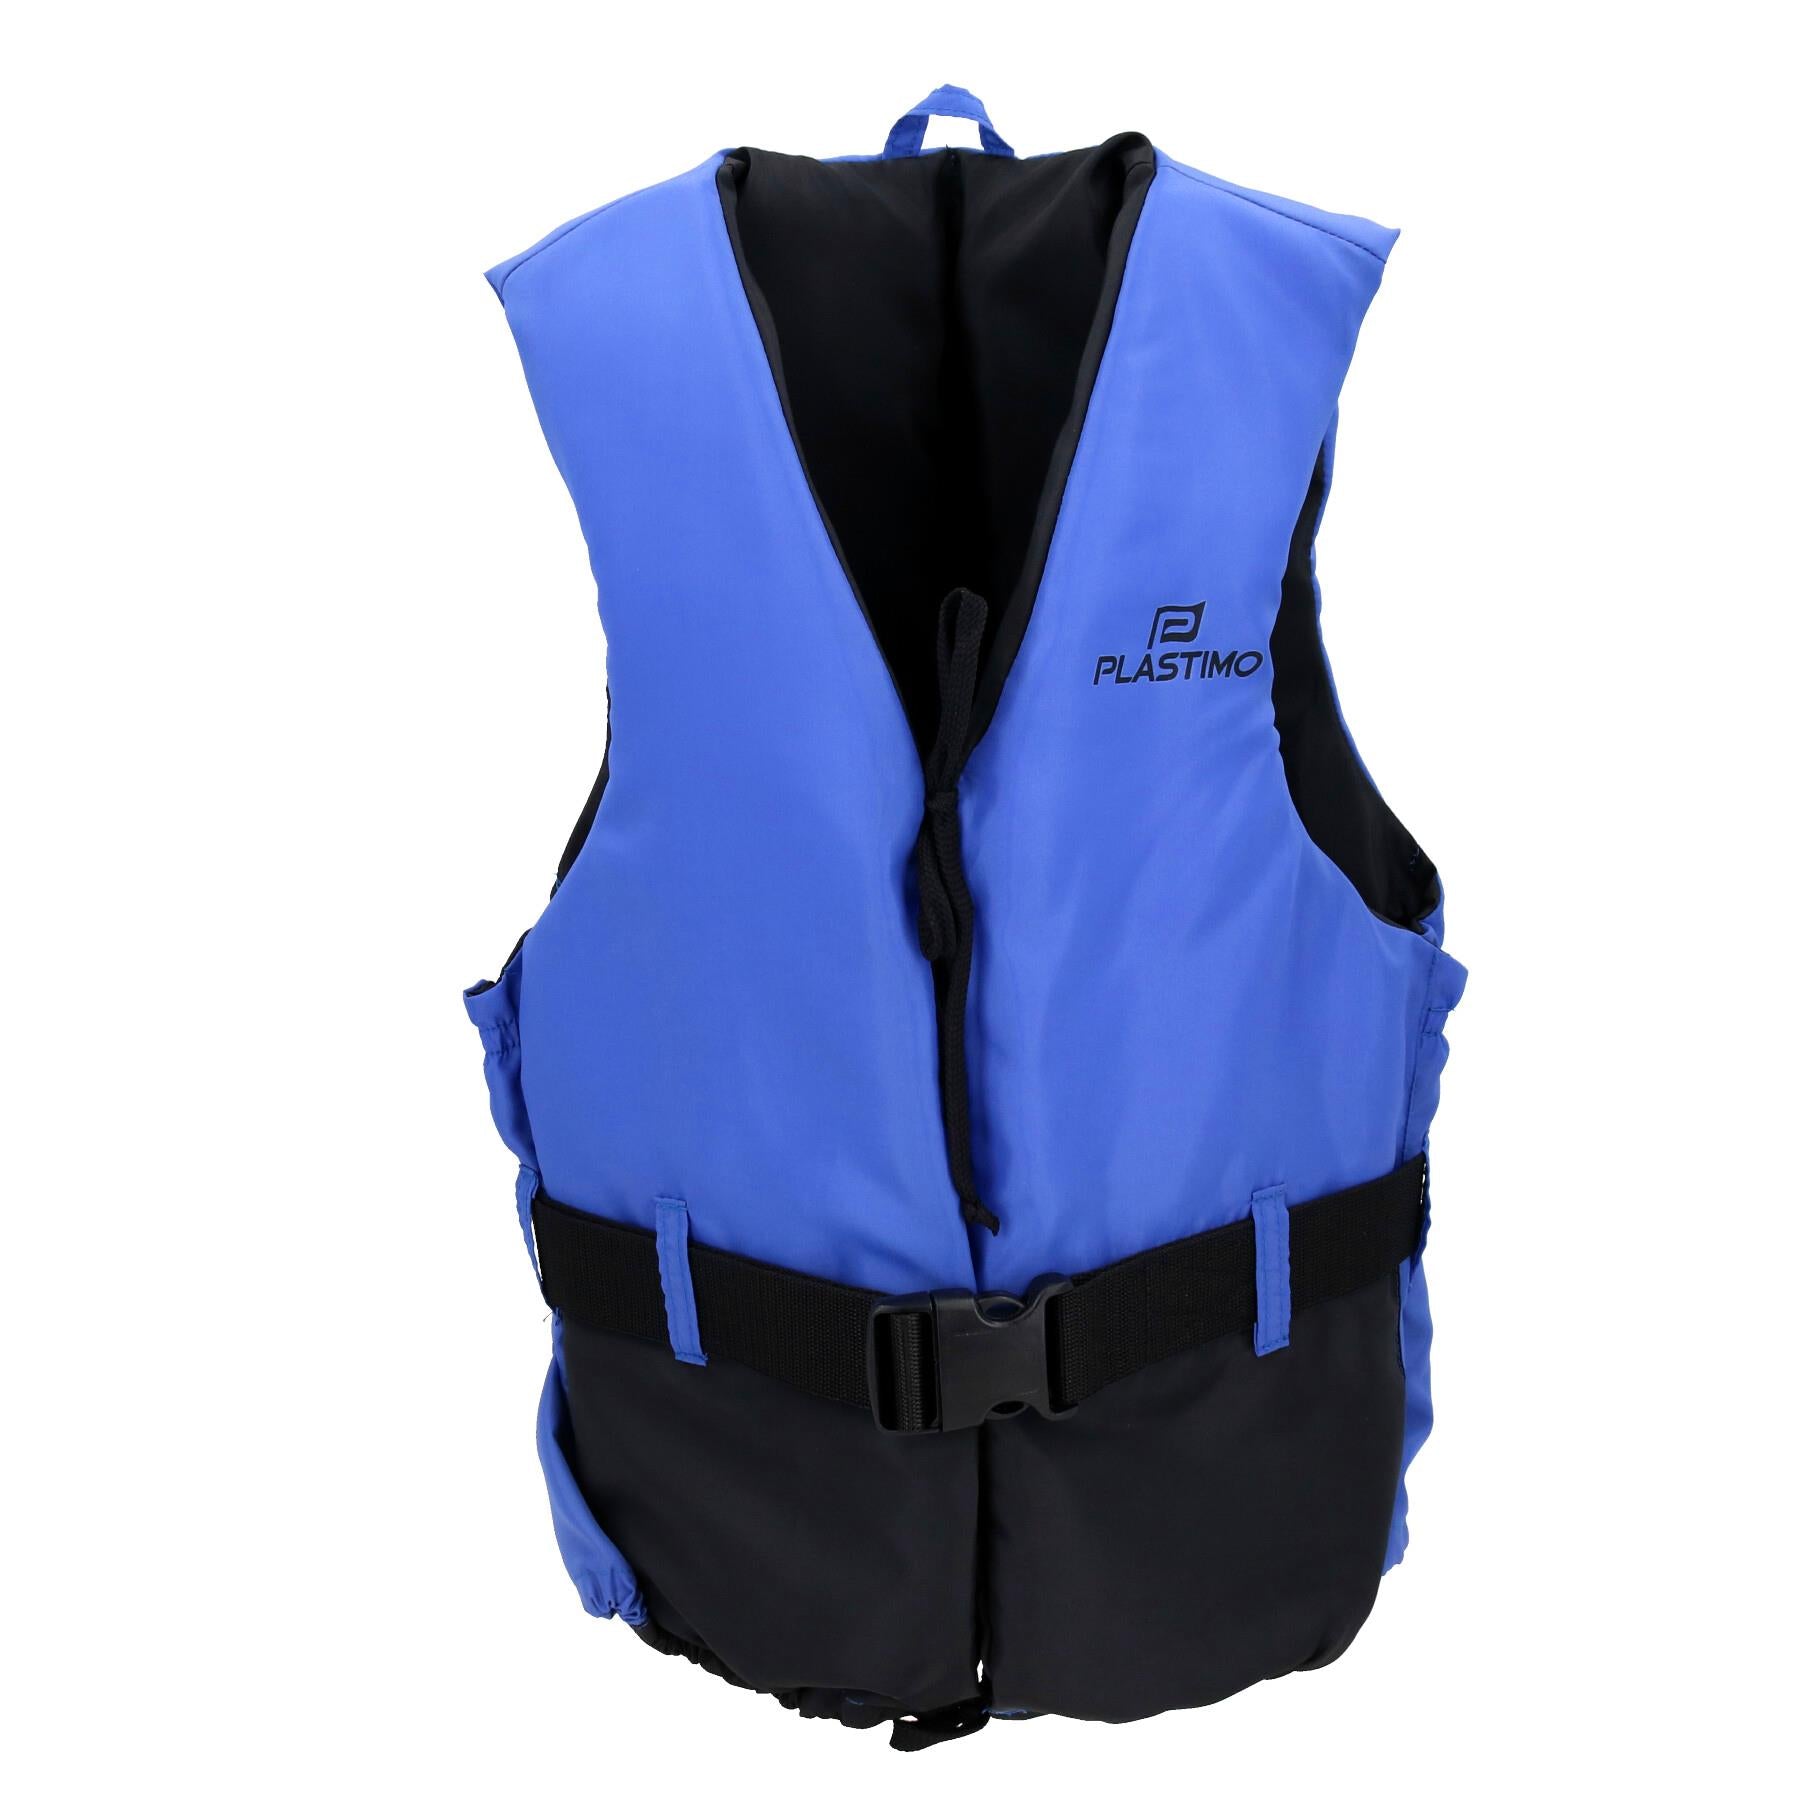 Large 70kg to 90kg Adult Buoyancy Aid Plastimo Olympia 50N Personal Floatation Jacket Device